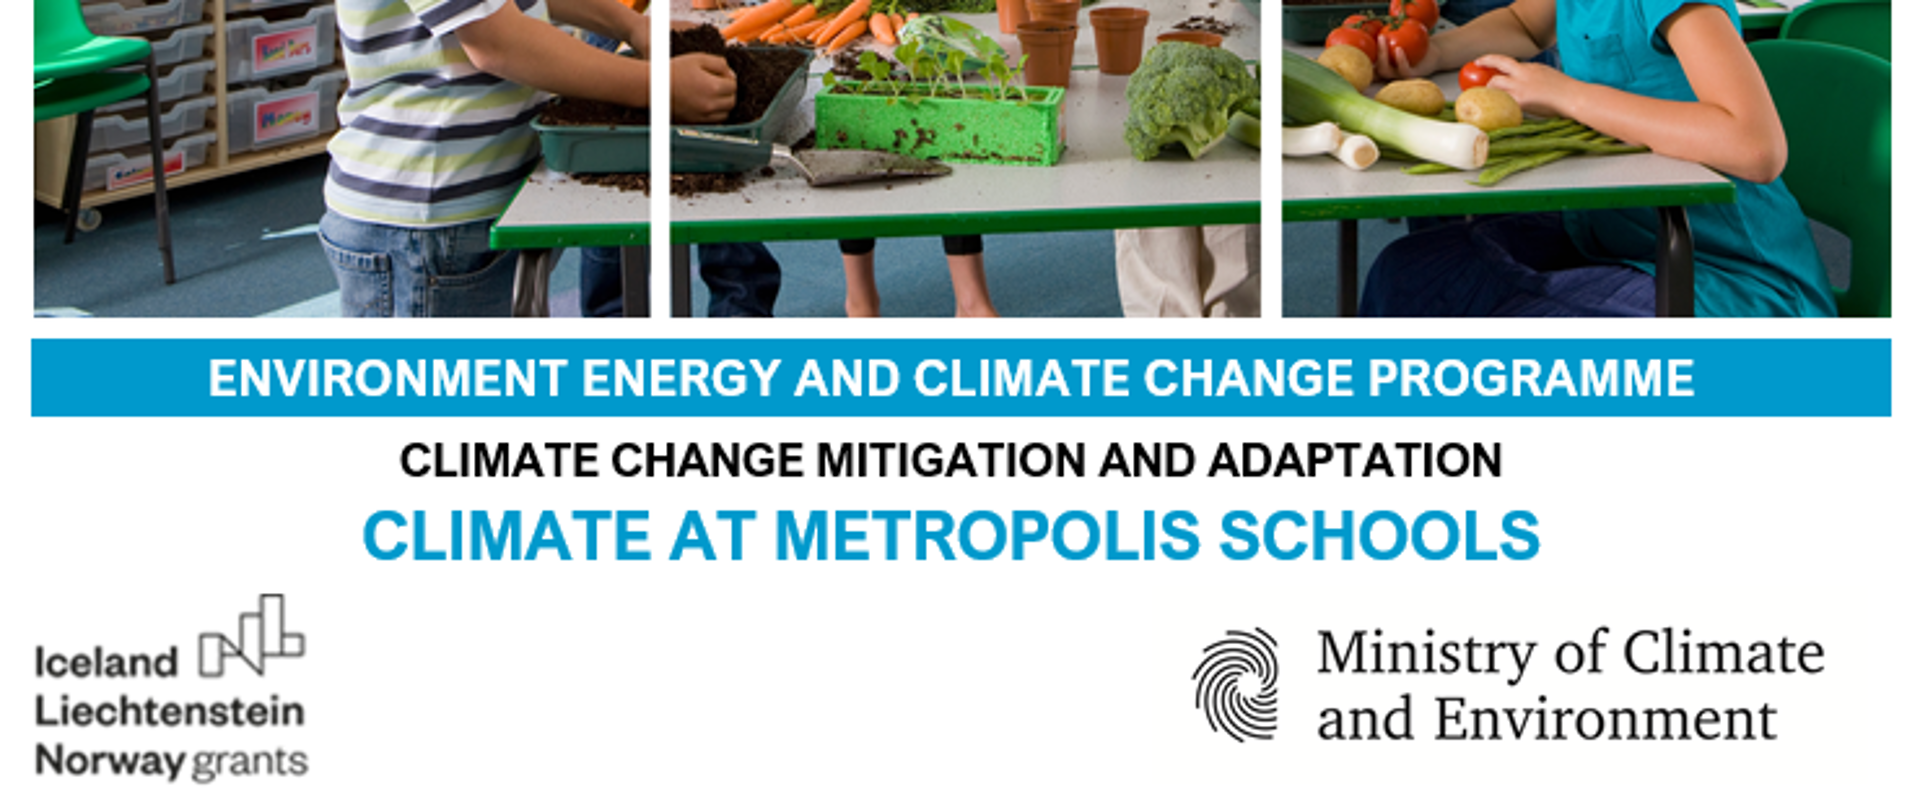 Climate at metropolis schools 